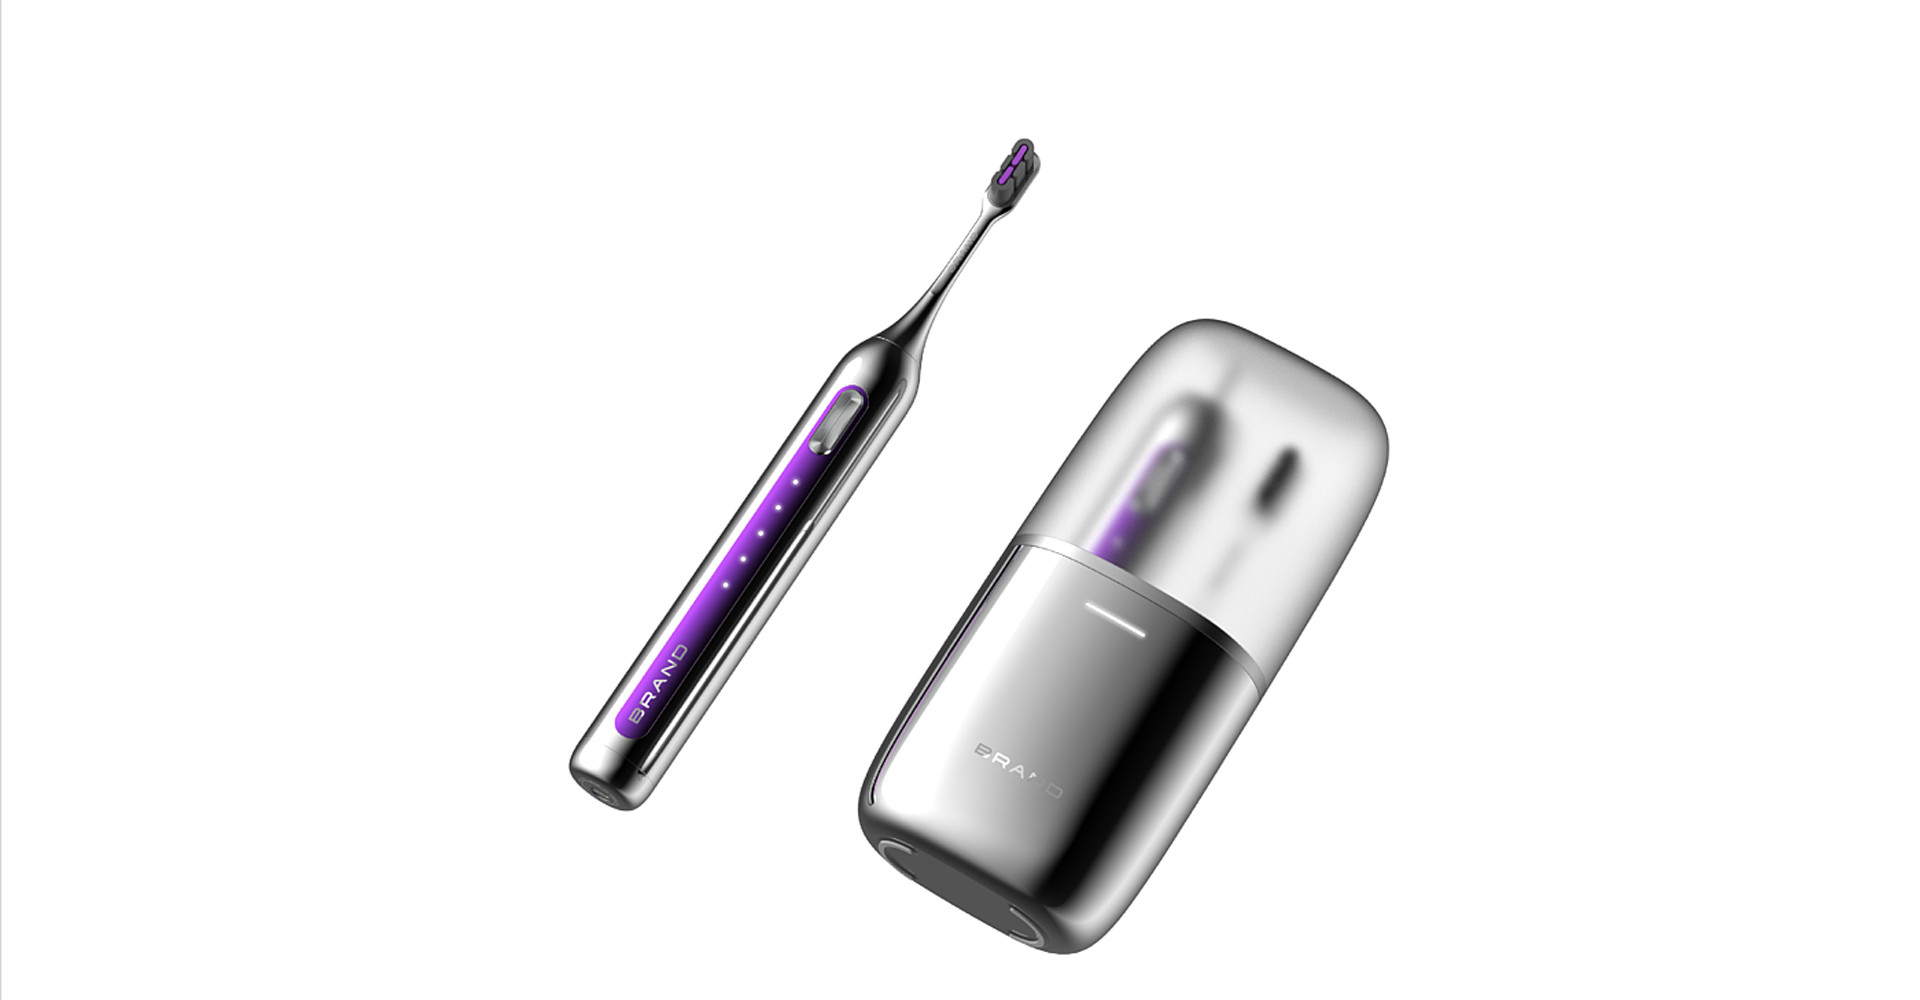 Electric Toothbrush Design (7)jv1